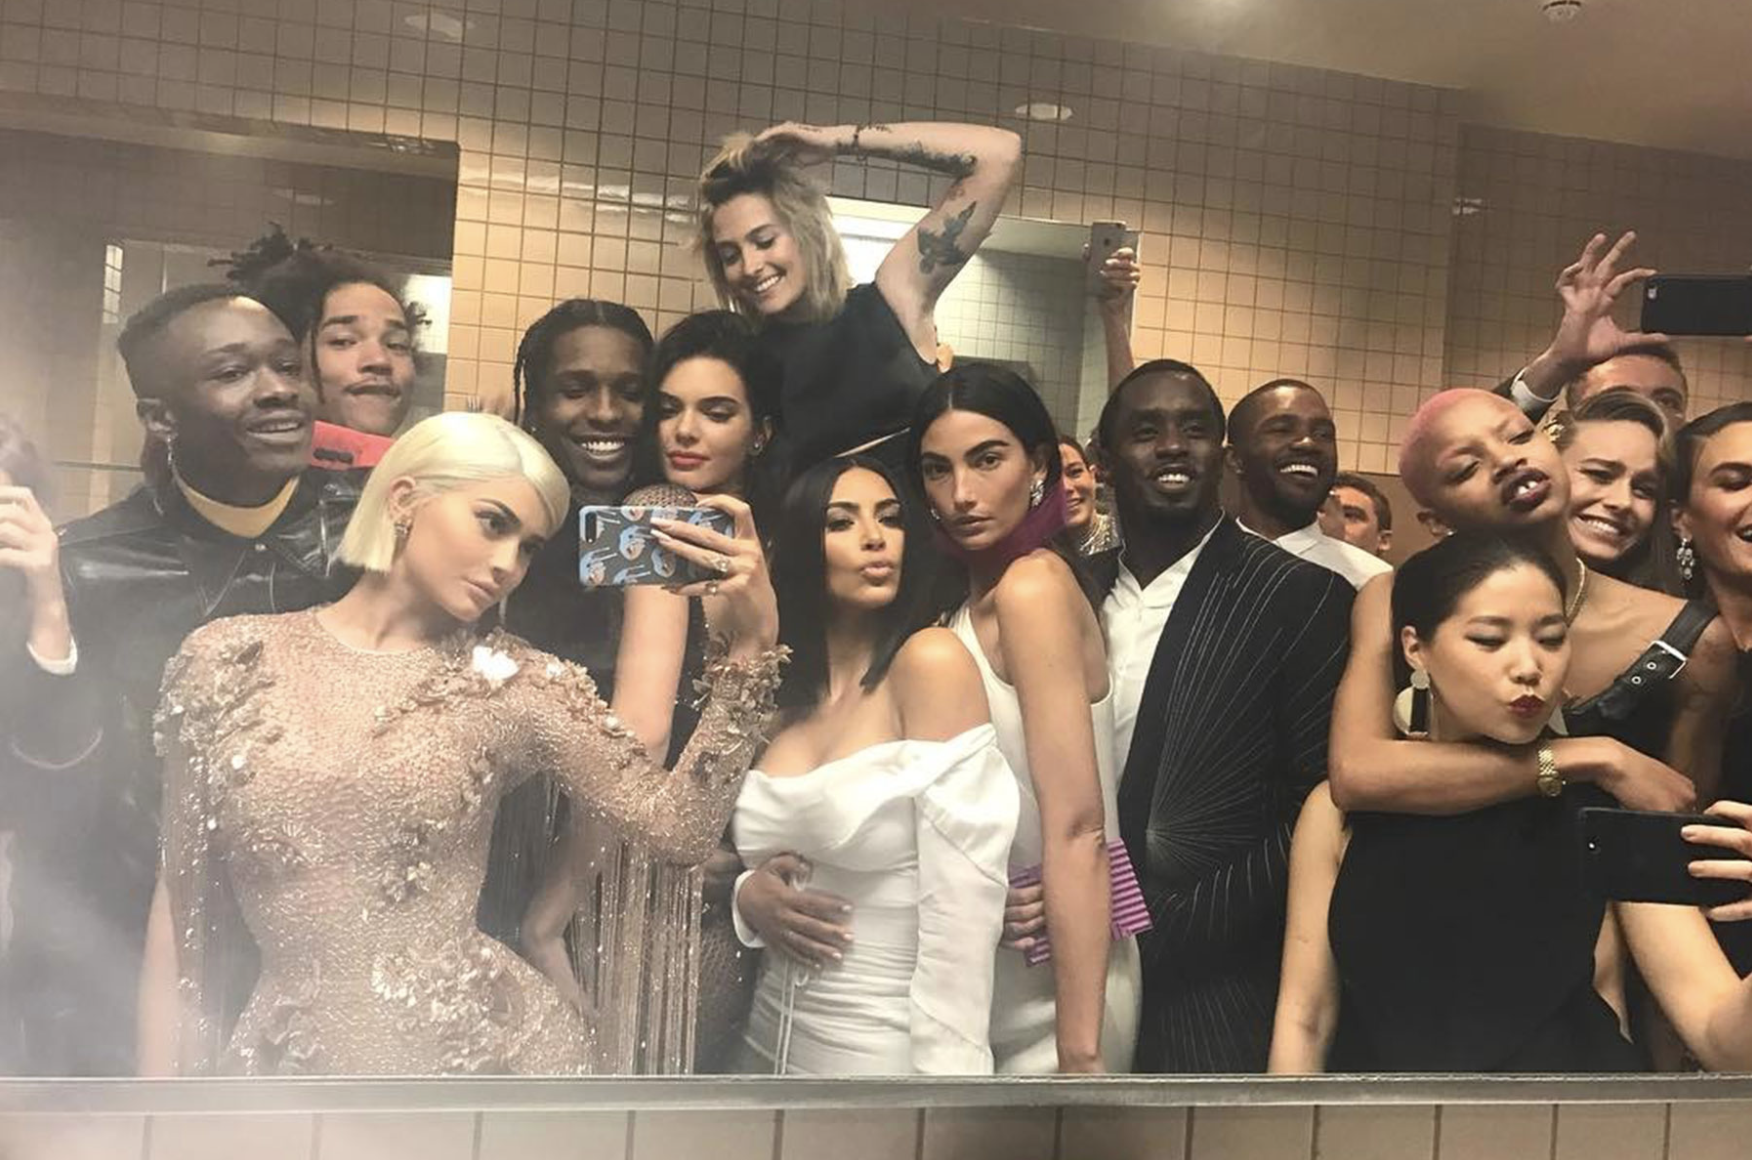 A bunch of celebs, including Kylie Jenner, Kim Kardashian, A$AP Rocky, and Diddy, taking a selfie